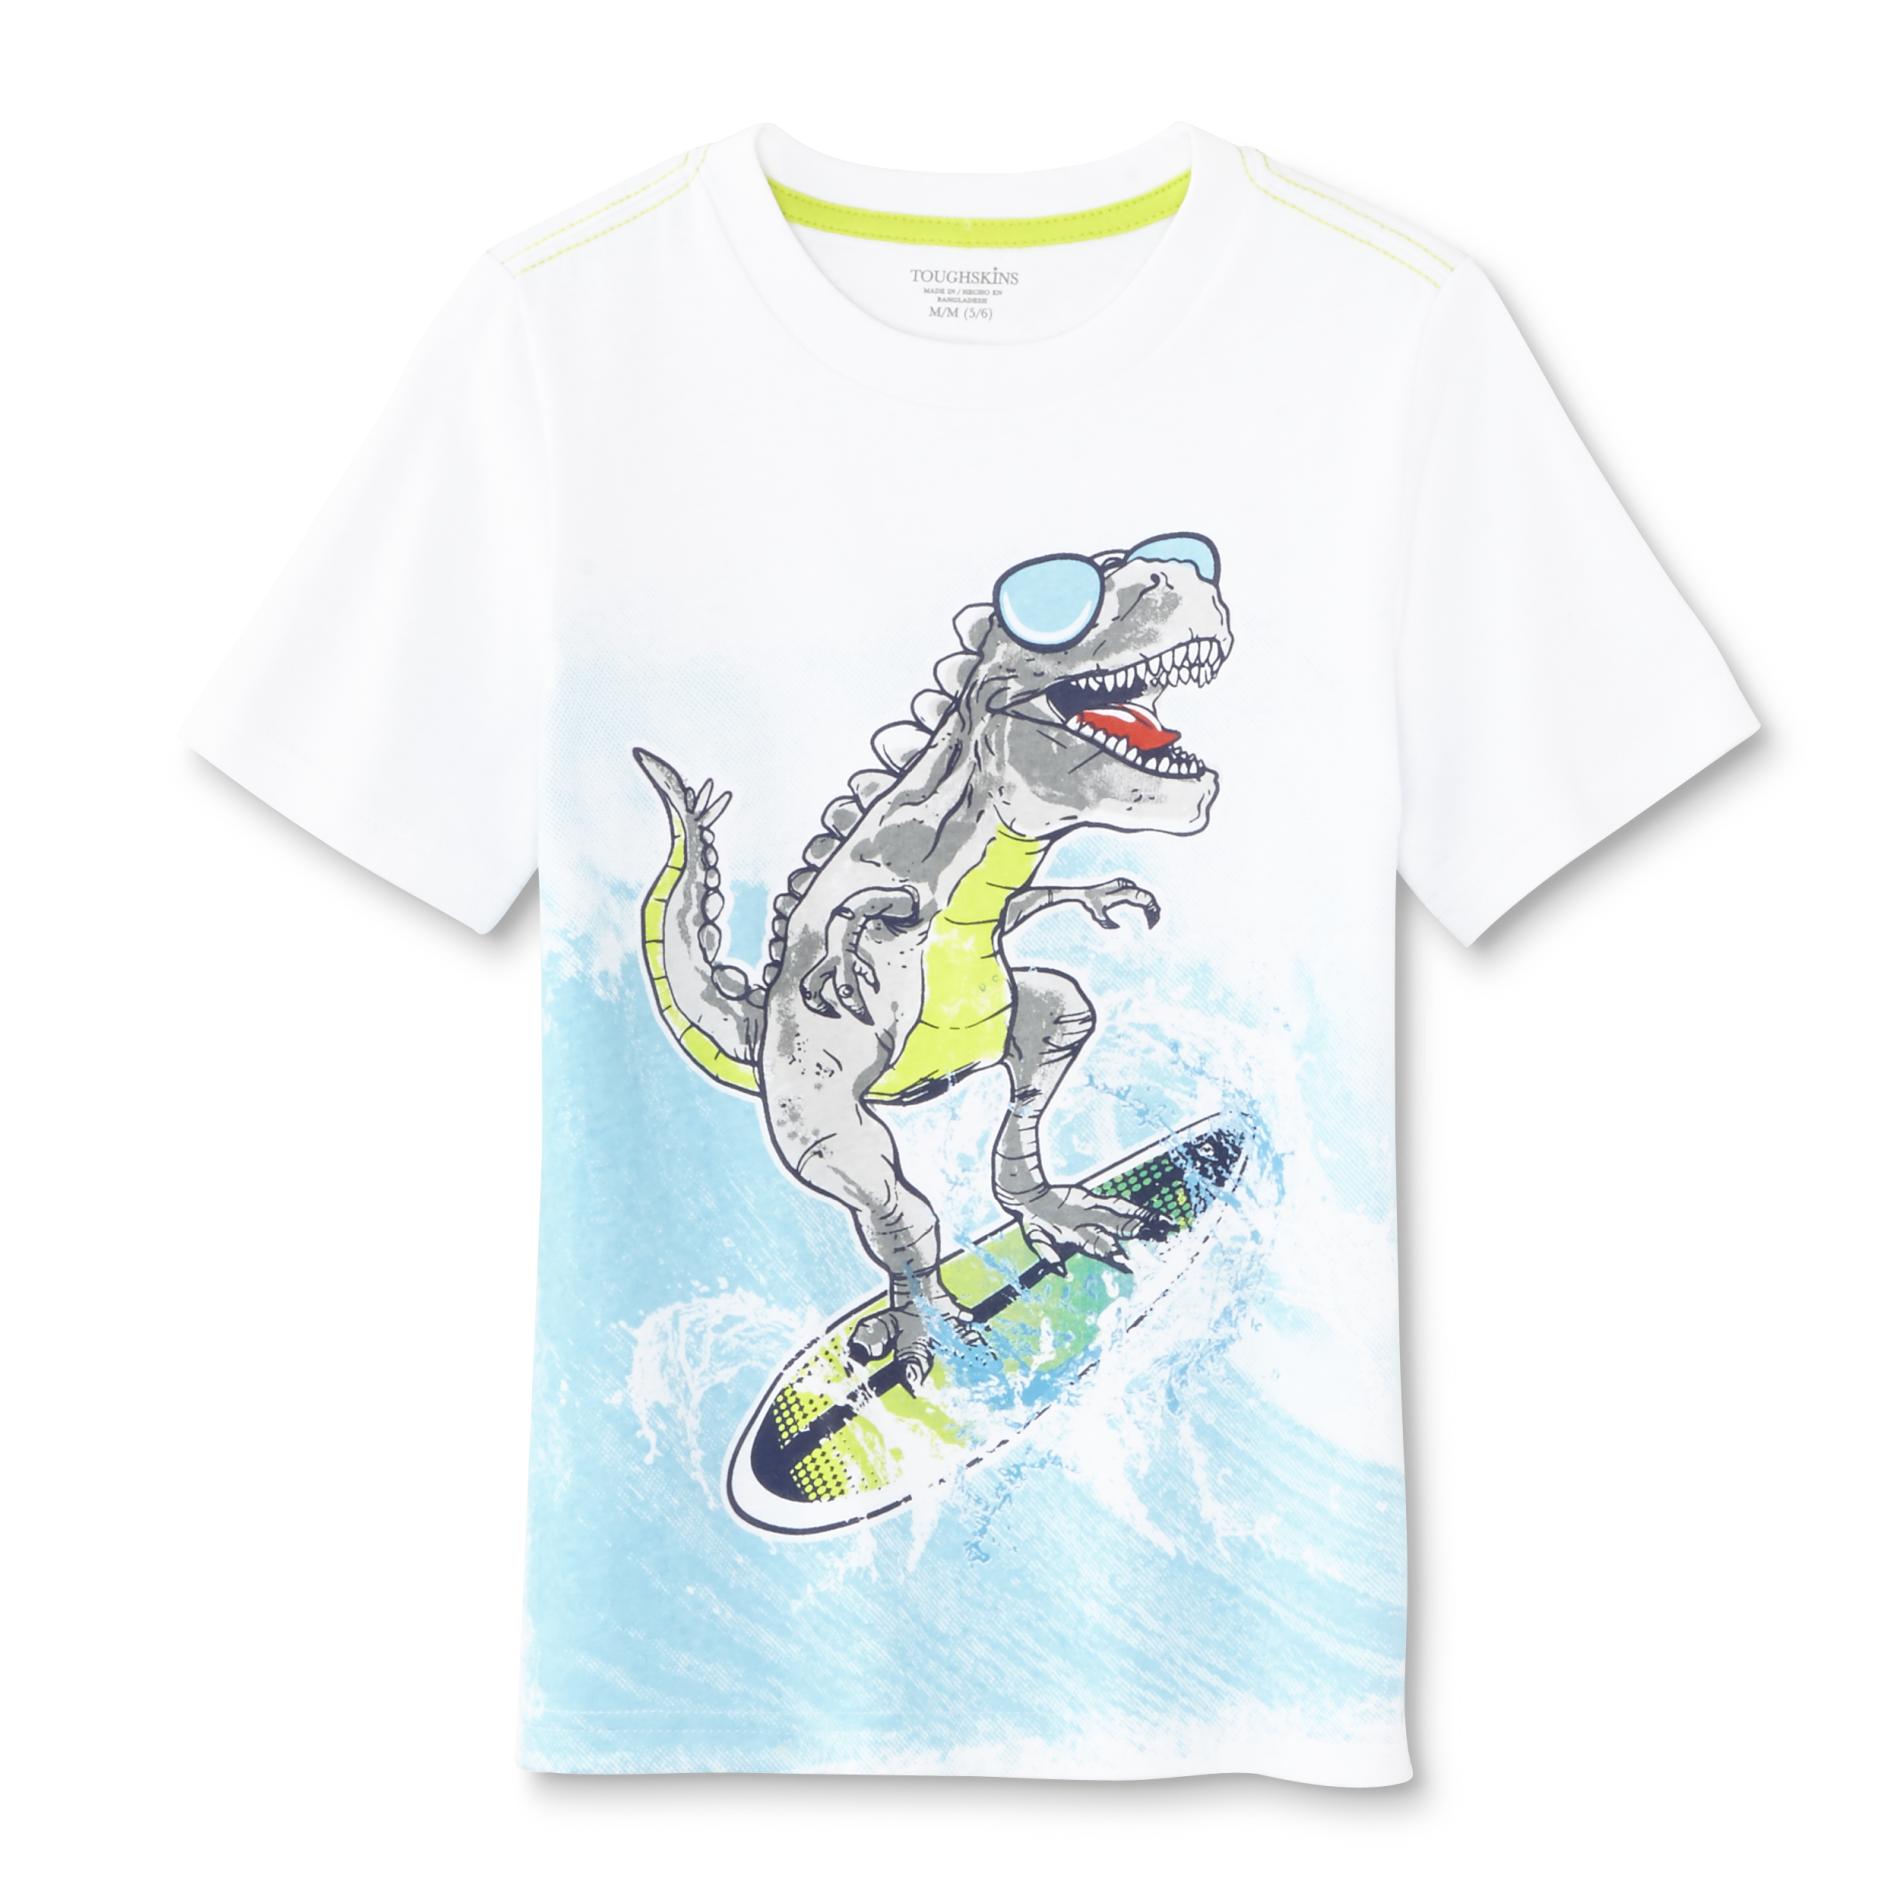 Toughskins Boy's Graphic T-Shirt - T. Rex